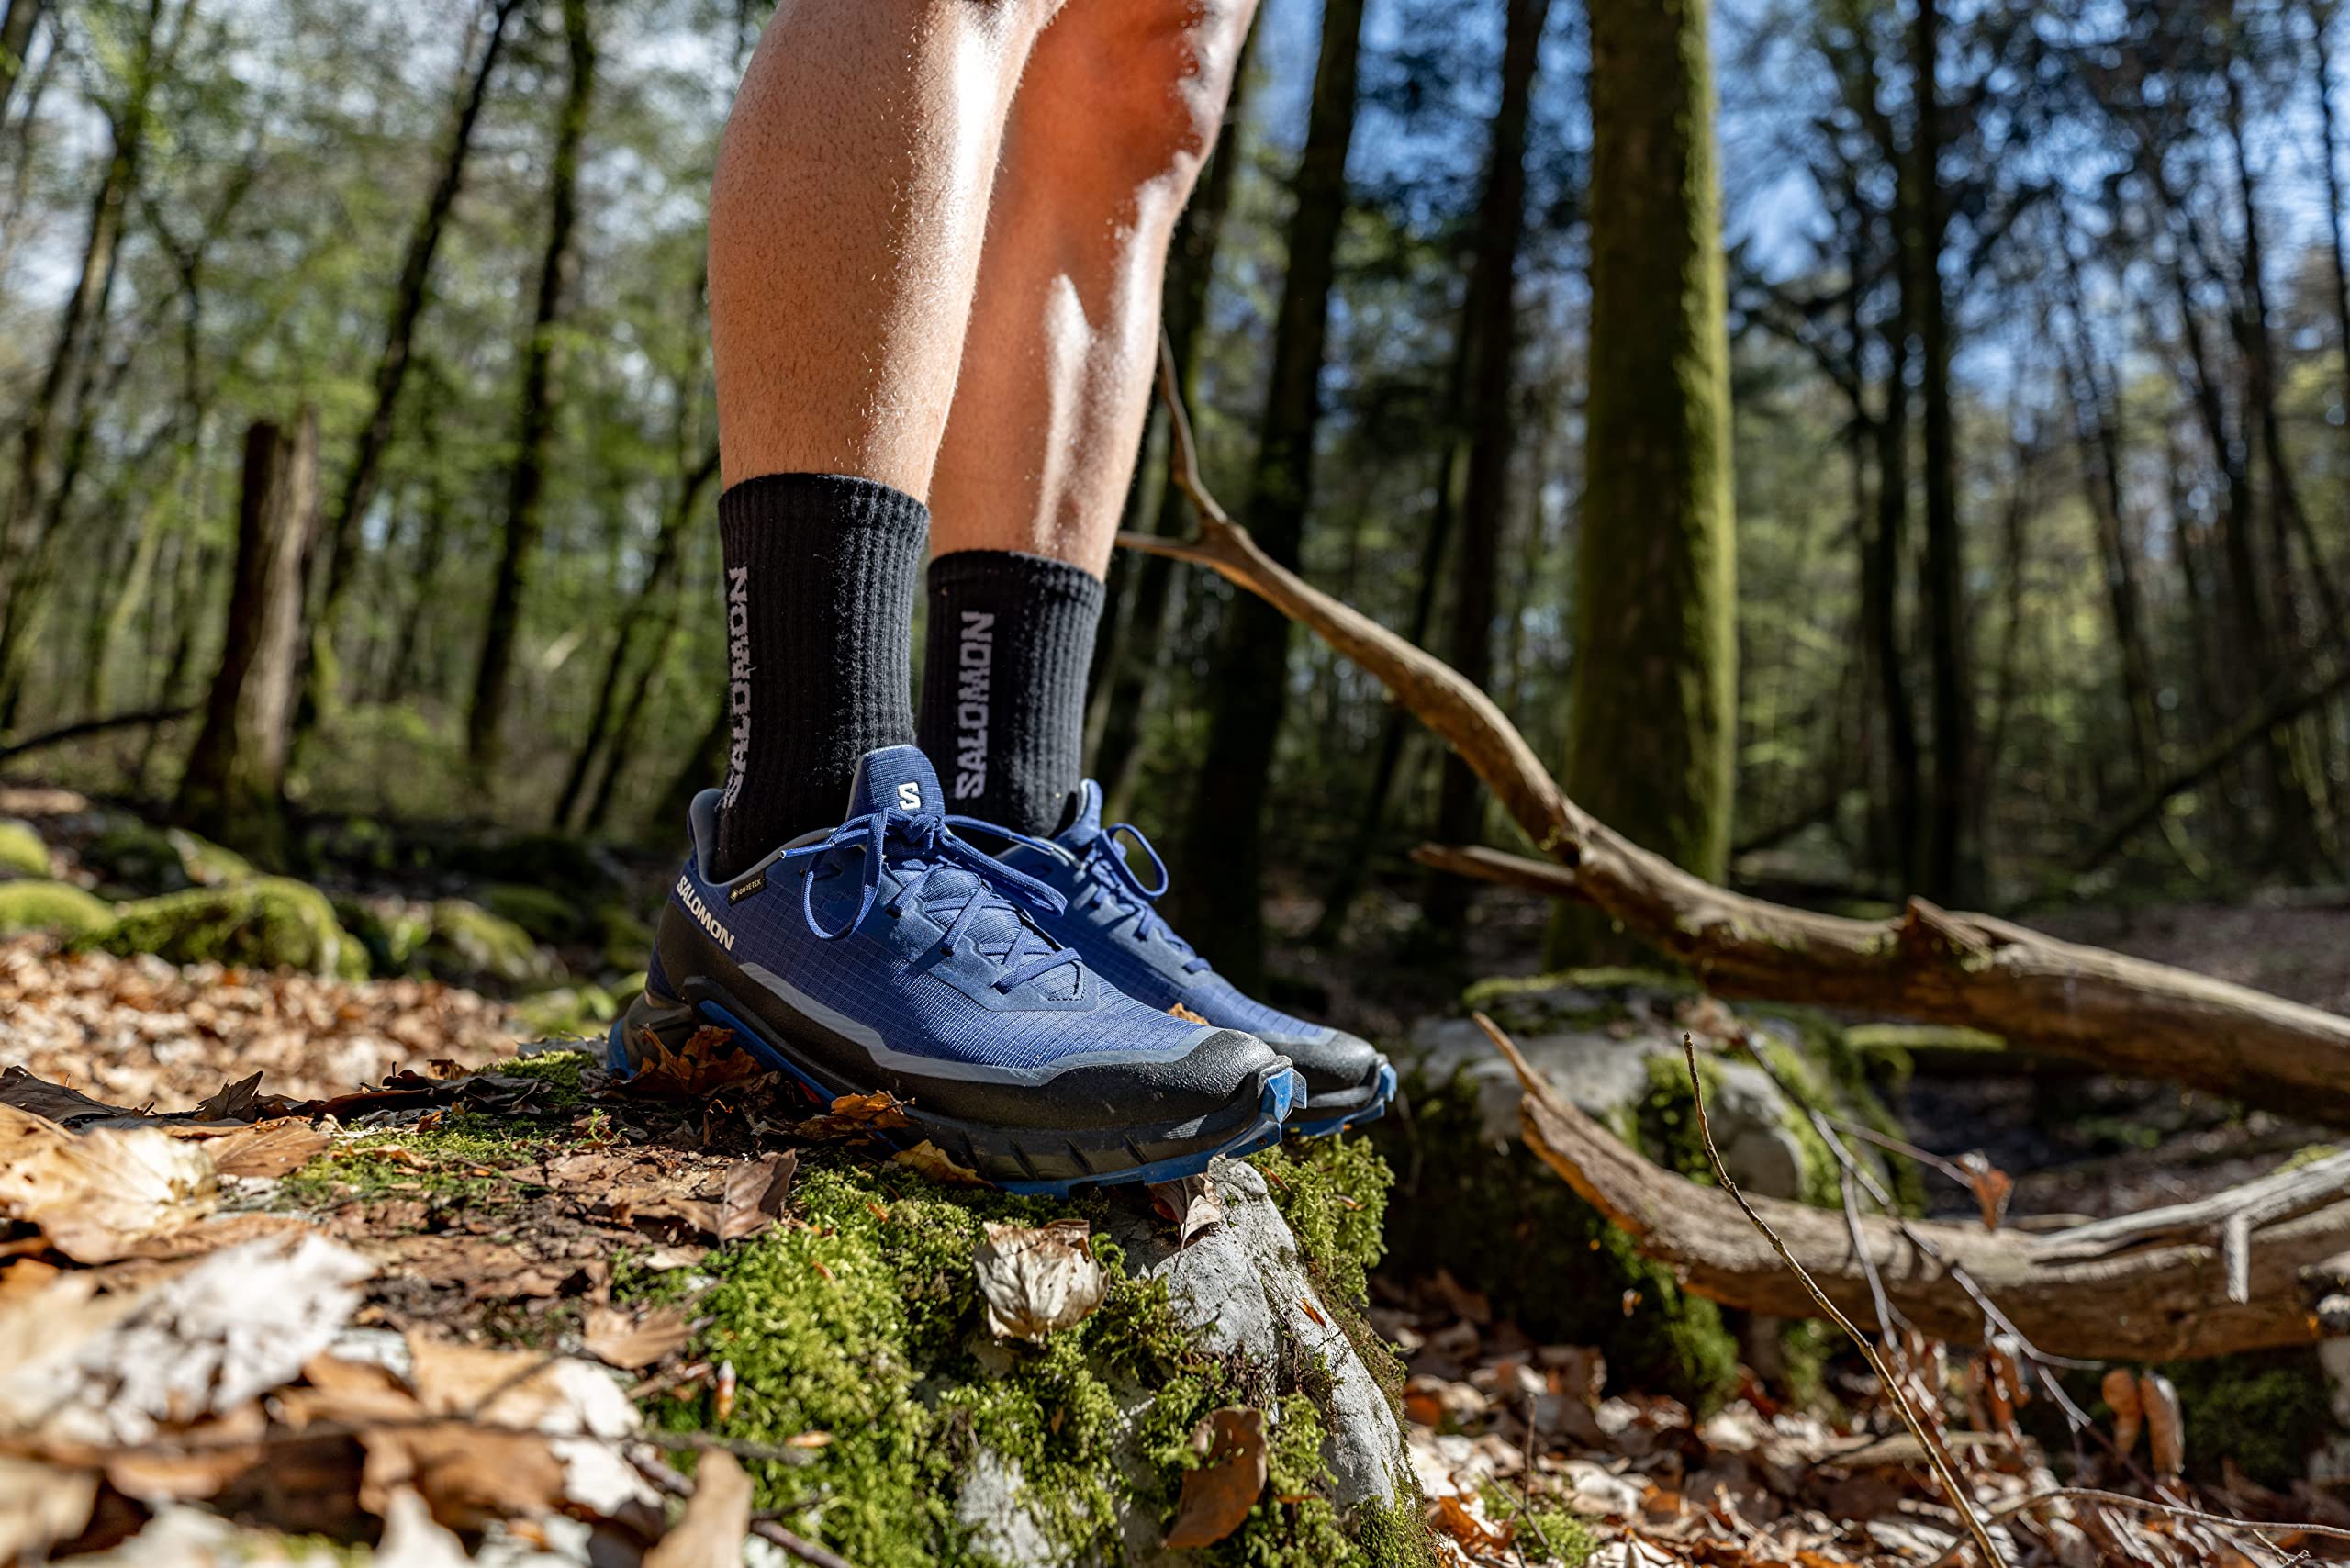 Salomon Men's Alphacross 5 GTX Hiking Shoe